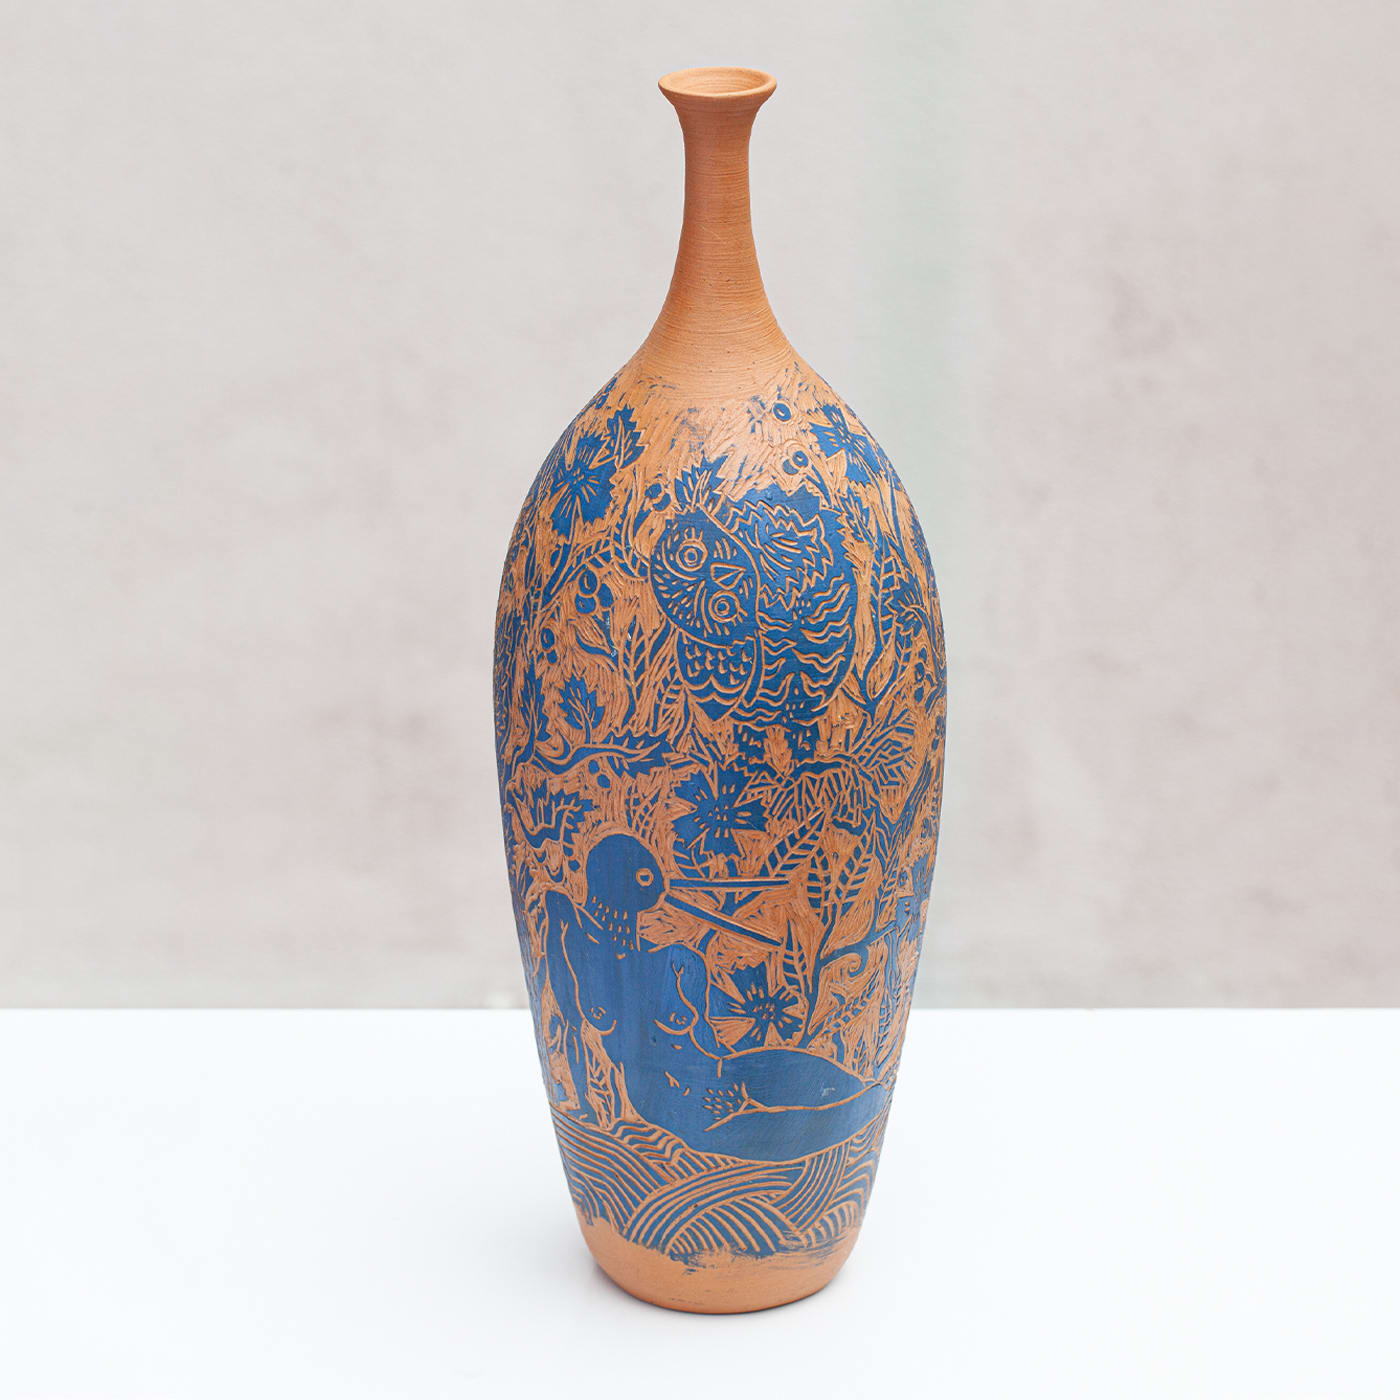 Aironi Heron Vase by Clara Holt and Chiara Zoppei - Clara Holt